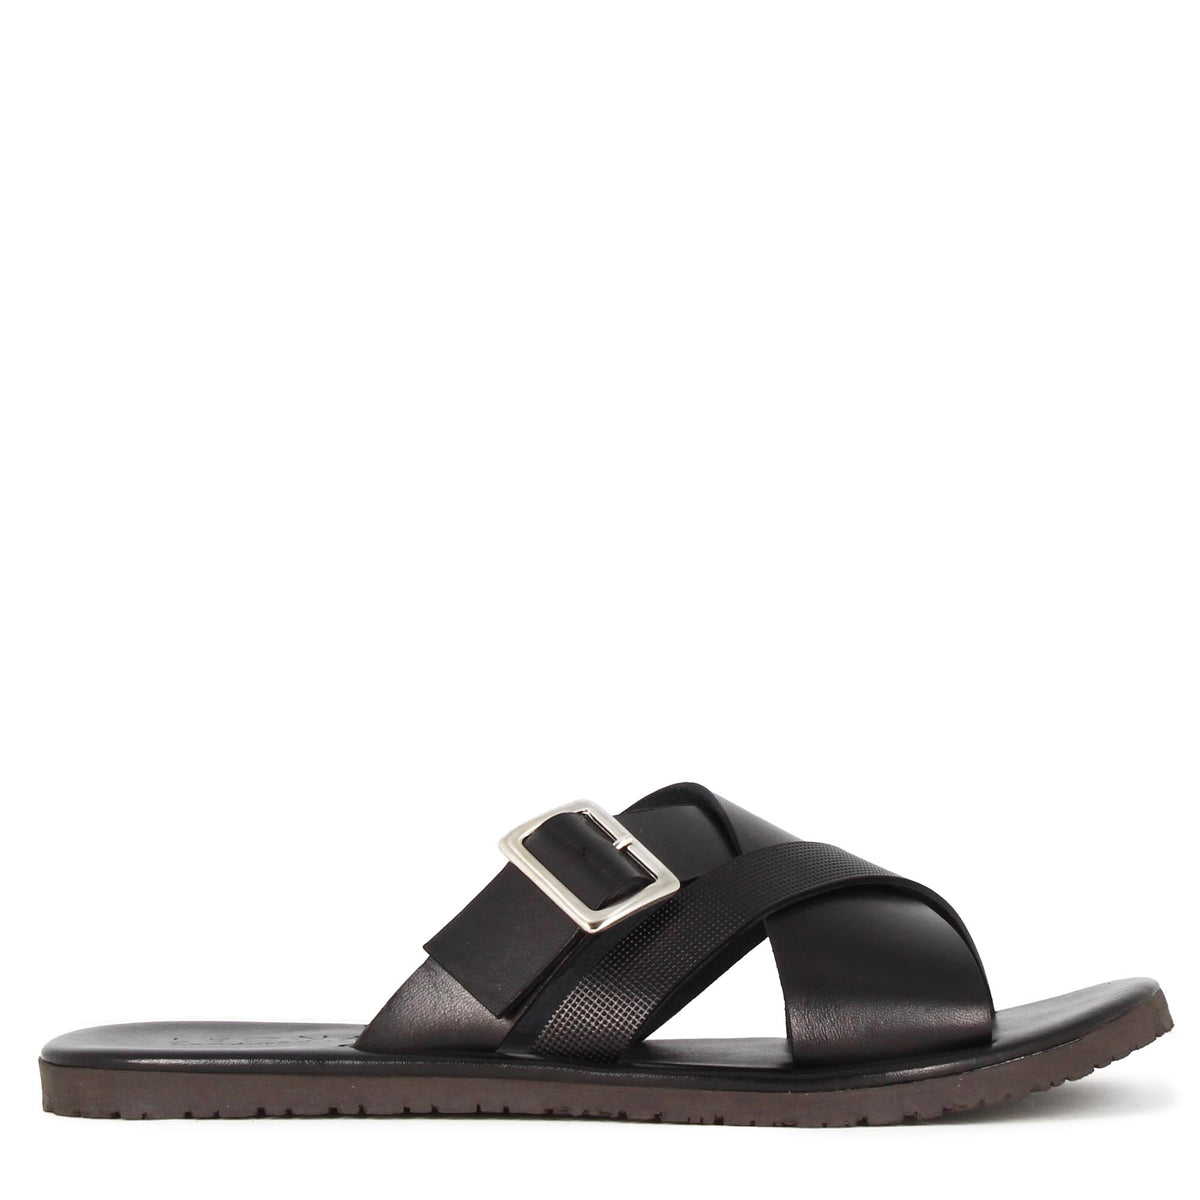 Men's slider sandal in black leather with buckle